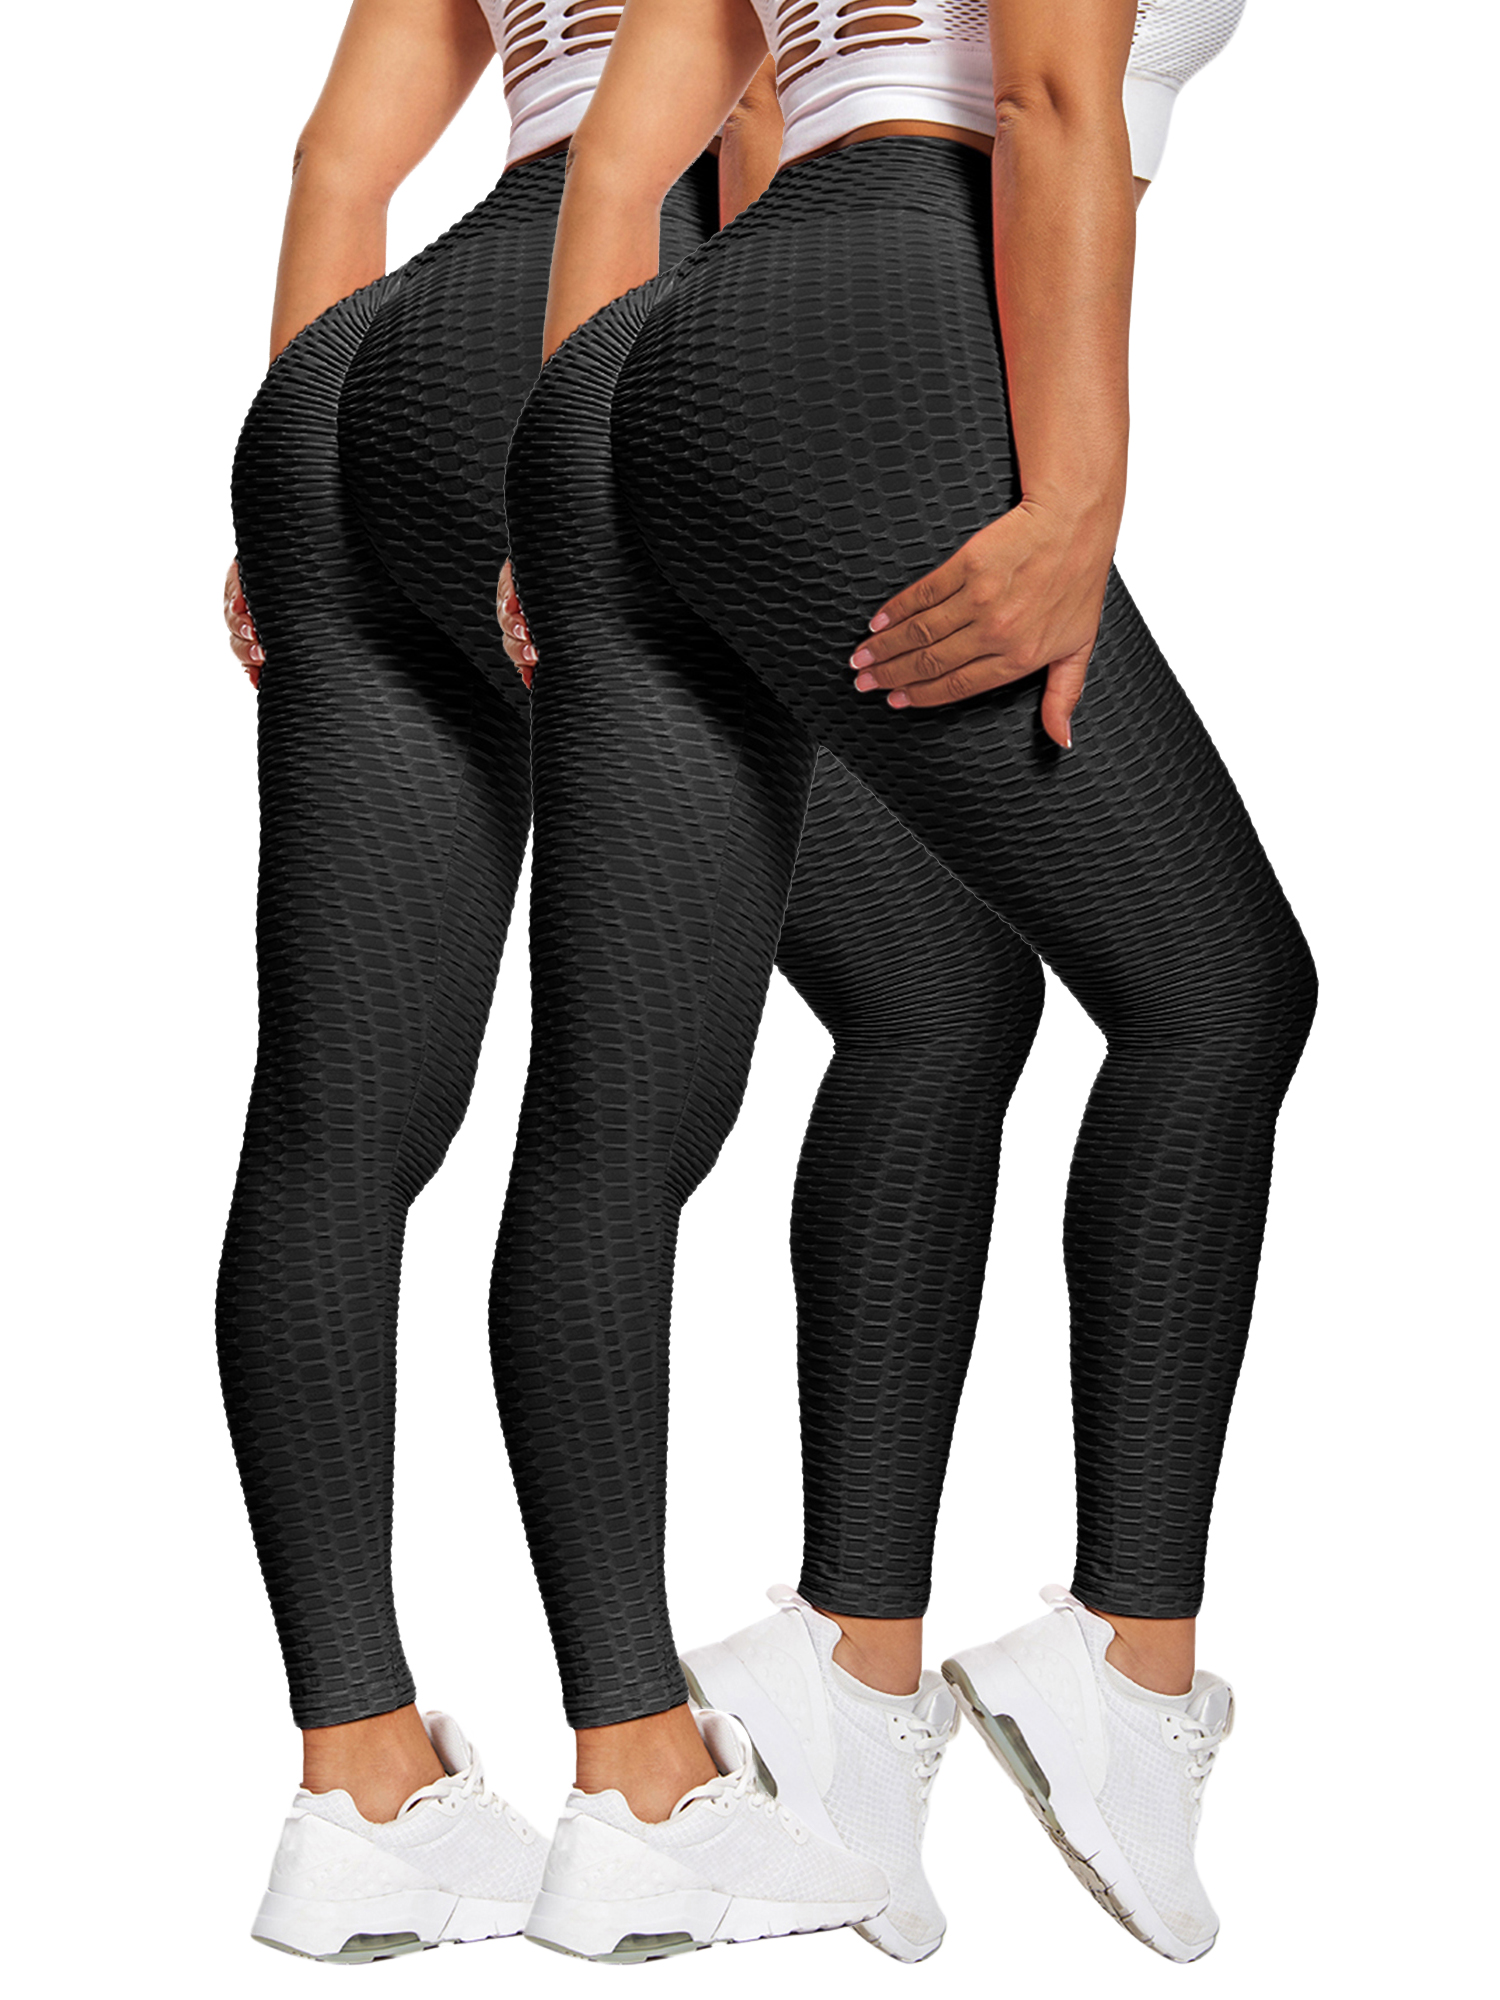 Women Yoga Pants Anti-Cellulite High Waisted Scrunch Push Up Honeycomb Leggings